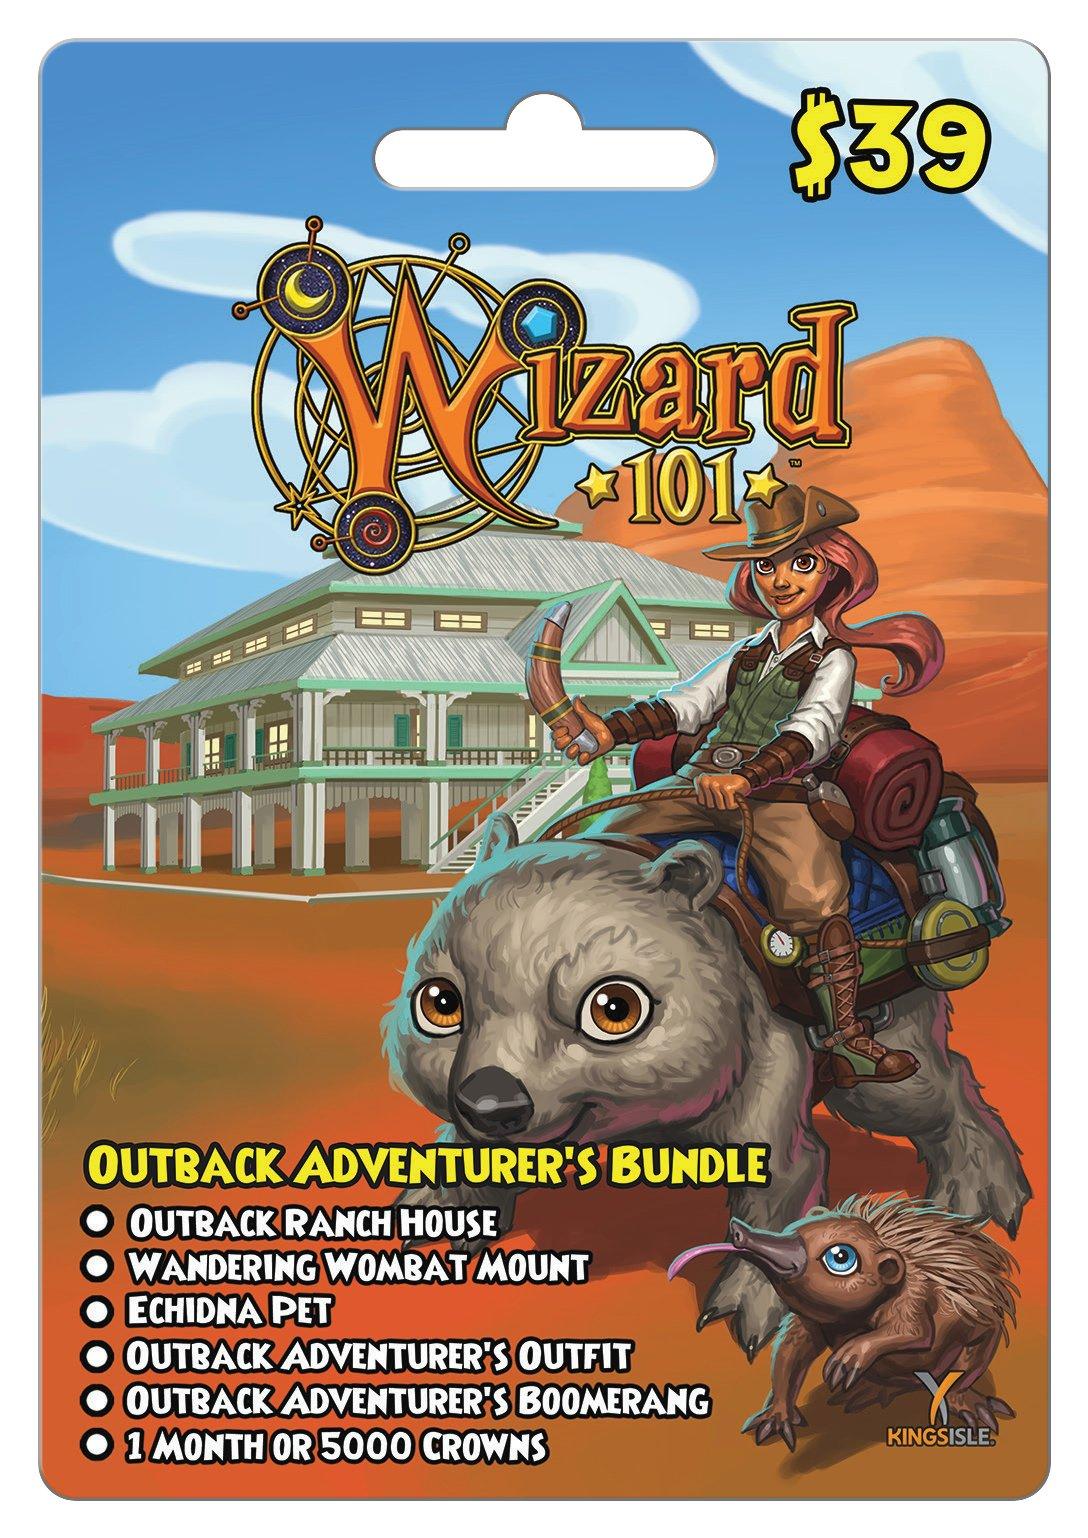 https://media.gamestop.com/i/gamestop/20009138/KingsIsle-Wizard101-Outback-Adventurers-Bundle